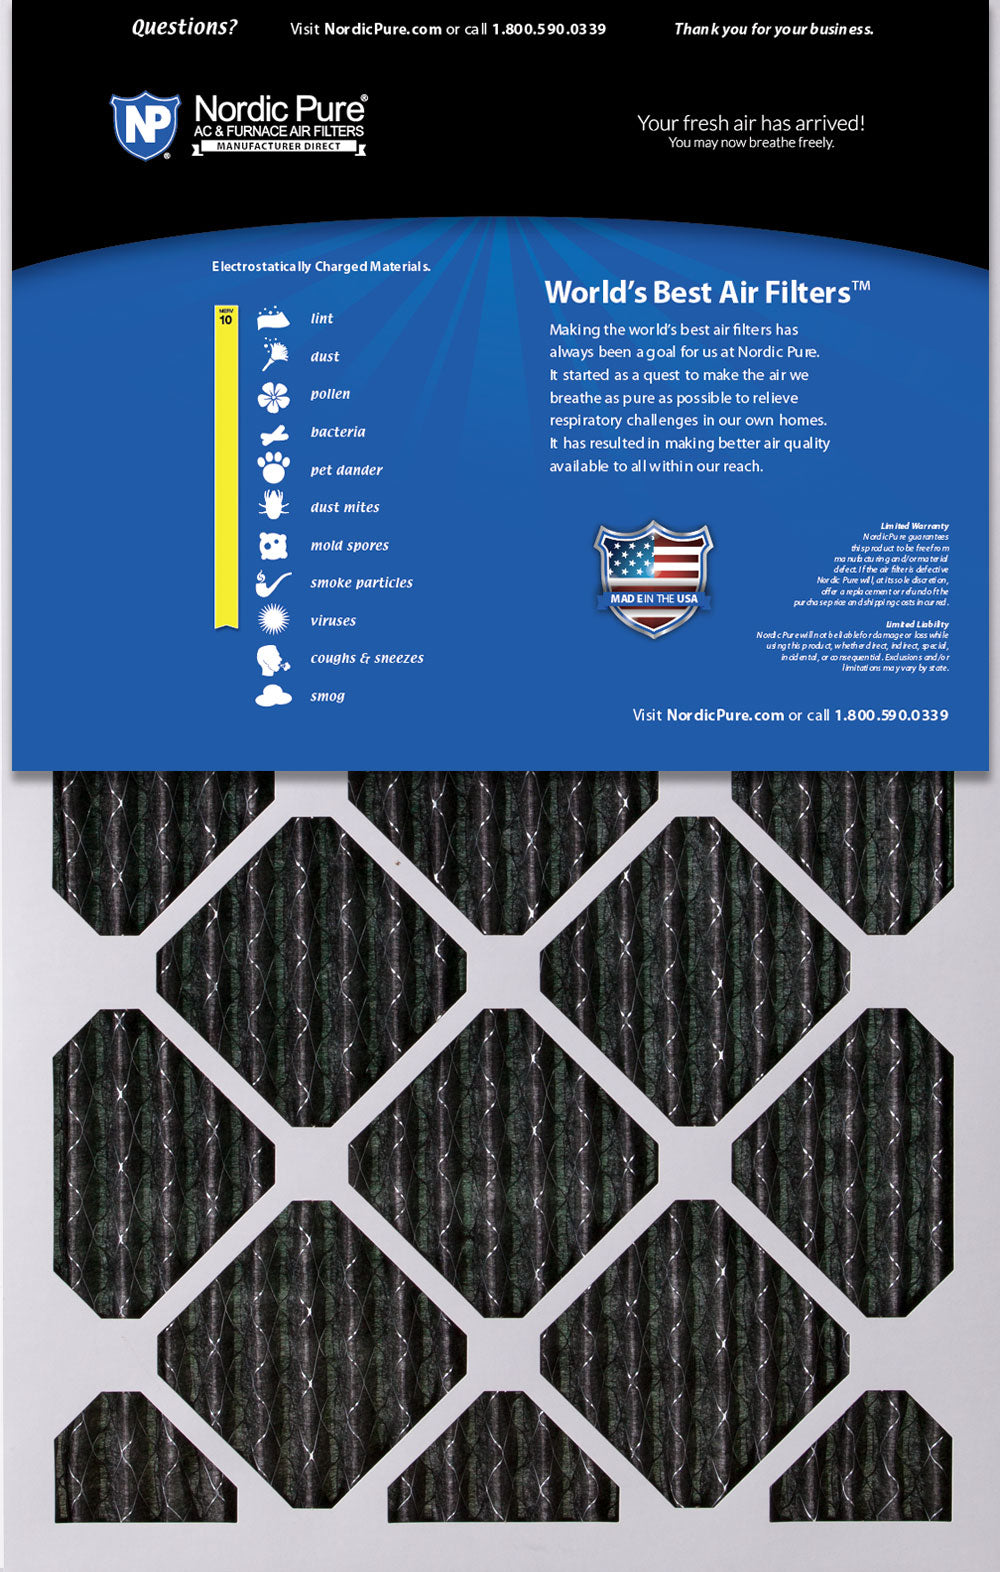 24 1/2x27x1 Trane ReplacementMERV 10 Plus Carbon AC Furnace Filters